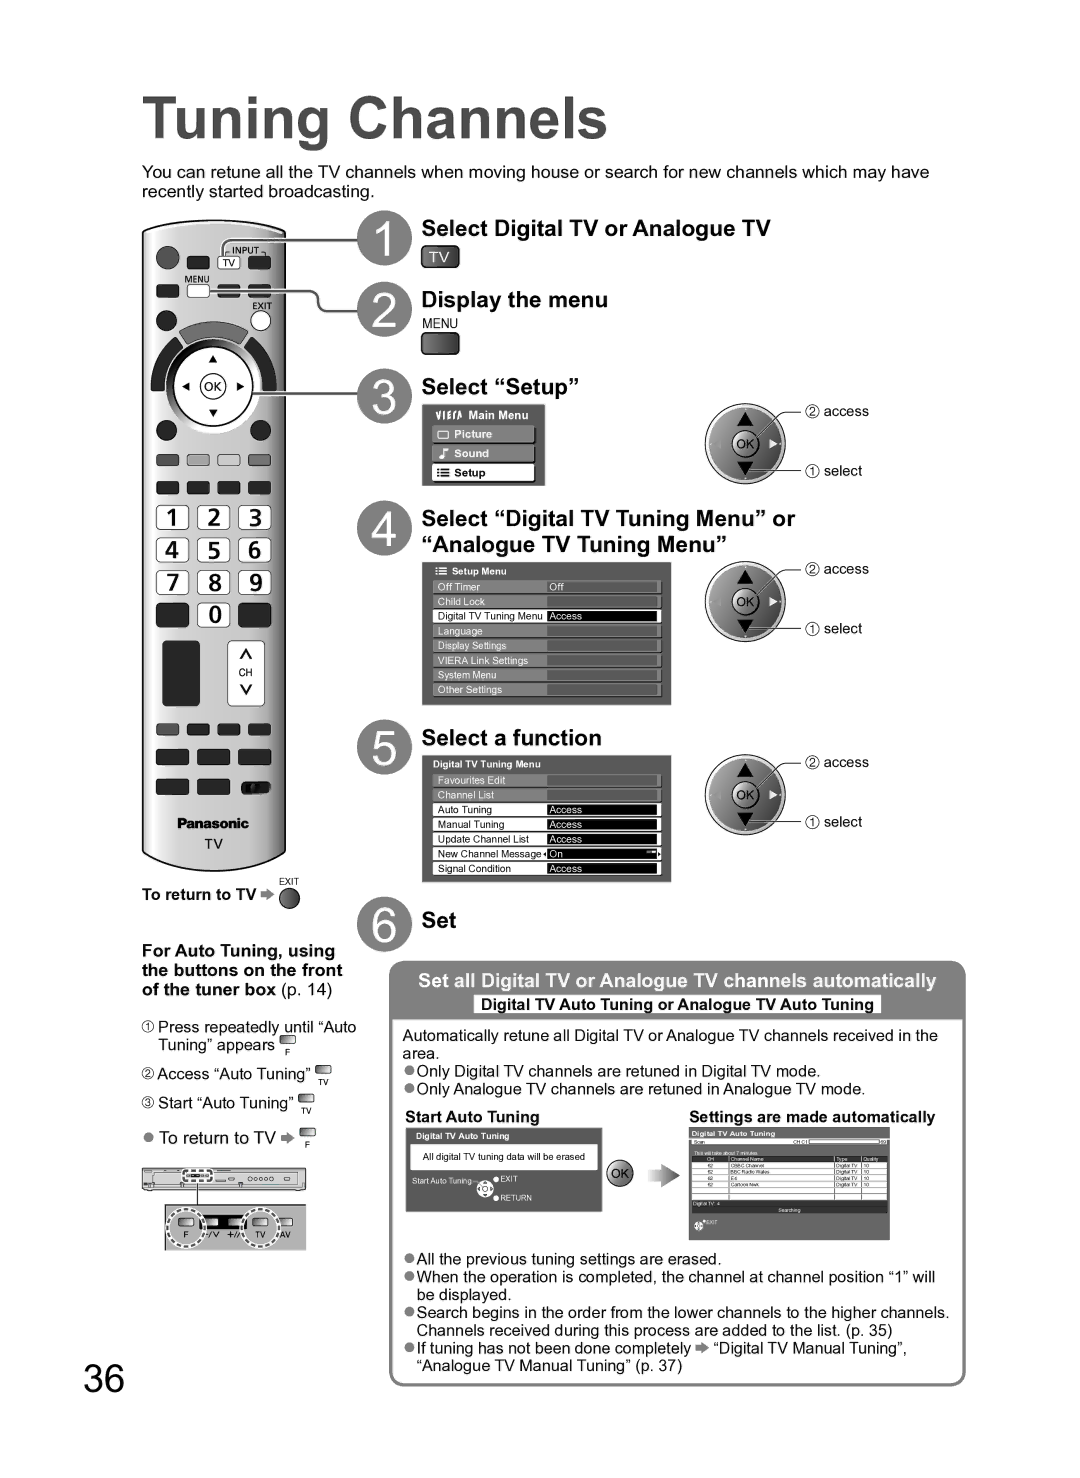 Panasonic TH-P54Z10H manual Tuning Channels, Digital TV or Analogue TV, Menu Select Setup, Analogue TV Tuning Menu 